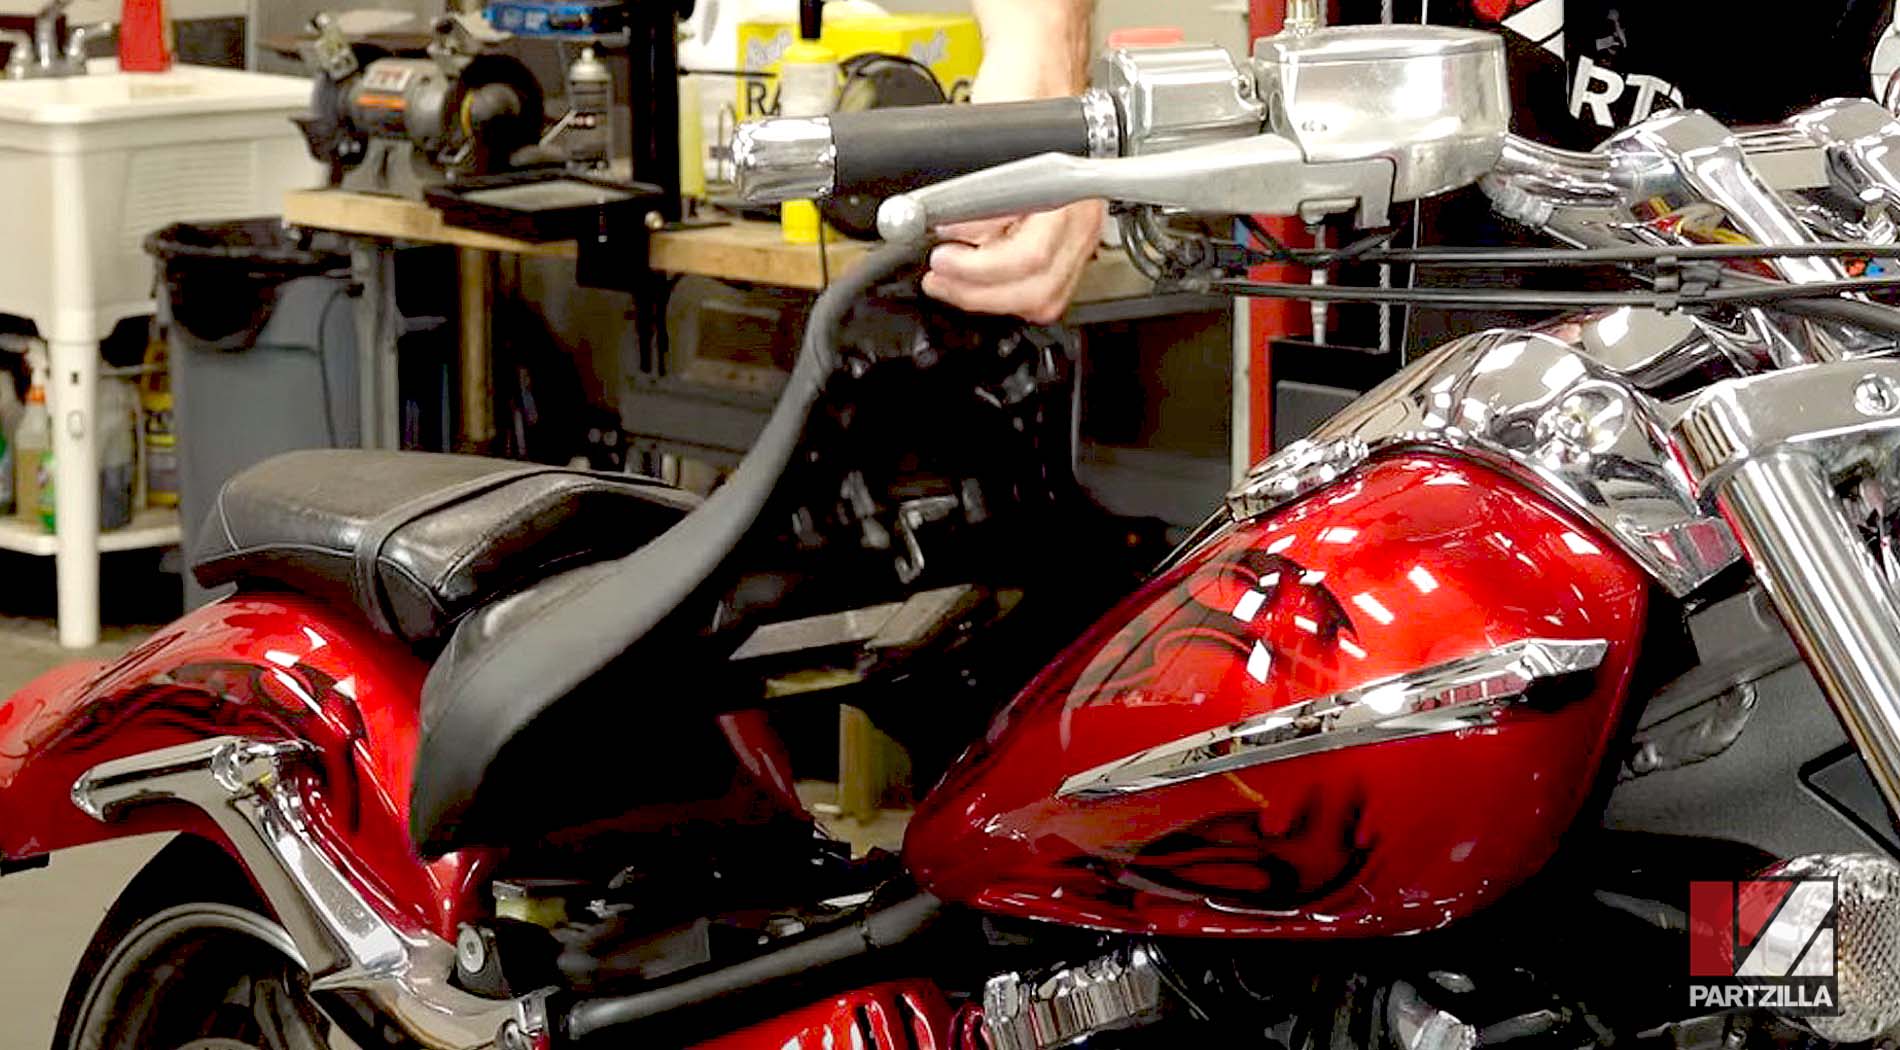 2008 Yamaha Raider motorcycle spark plugs replacement